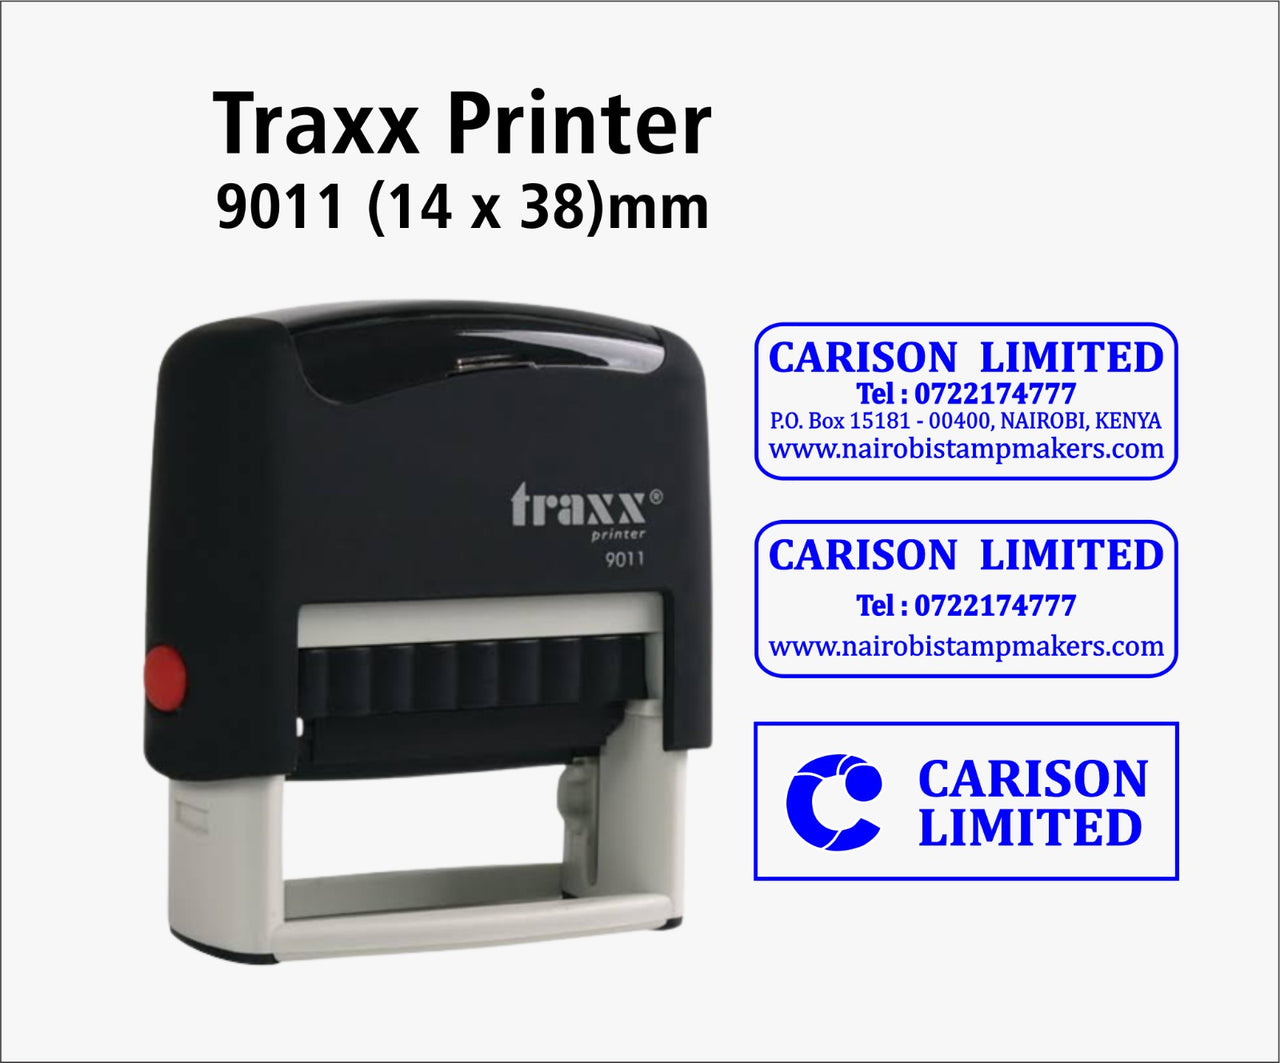 AccuMark Pro: The Traxx Printer 38x14mm Self-Inking Stamp